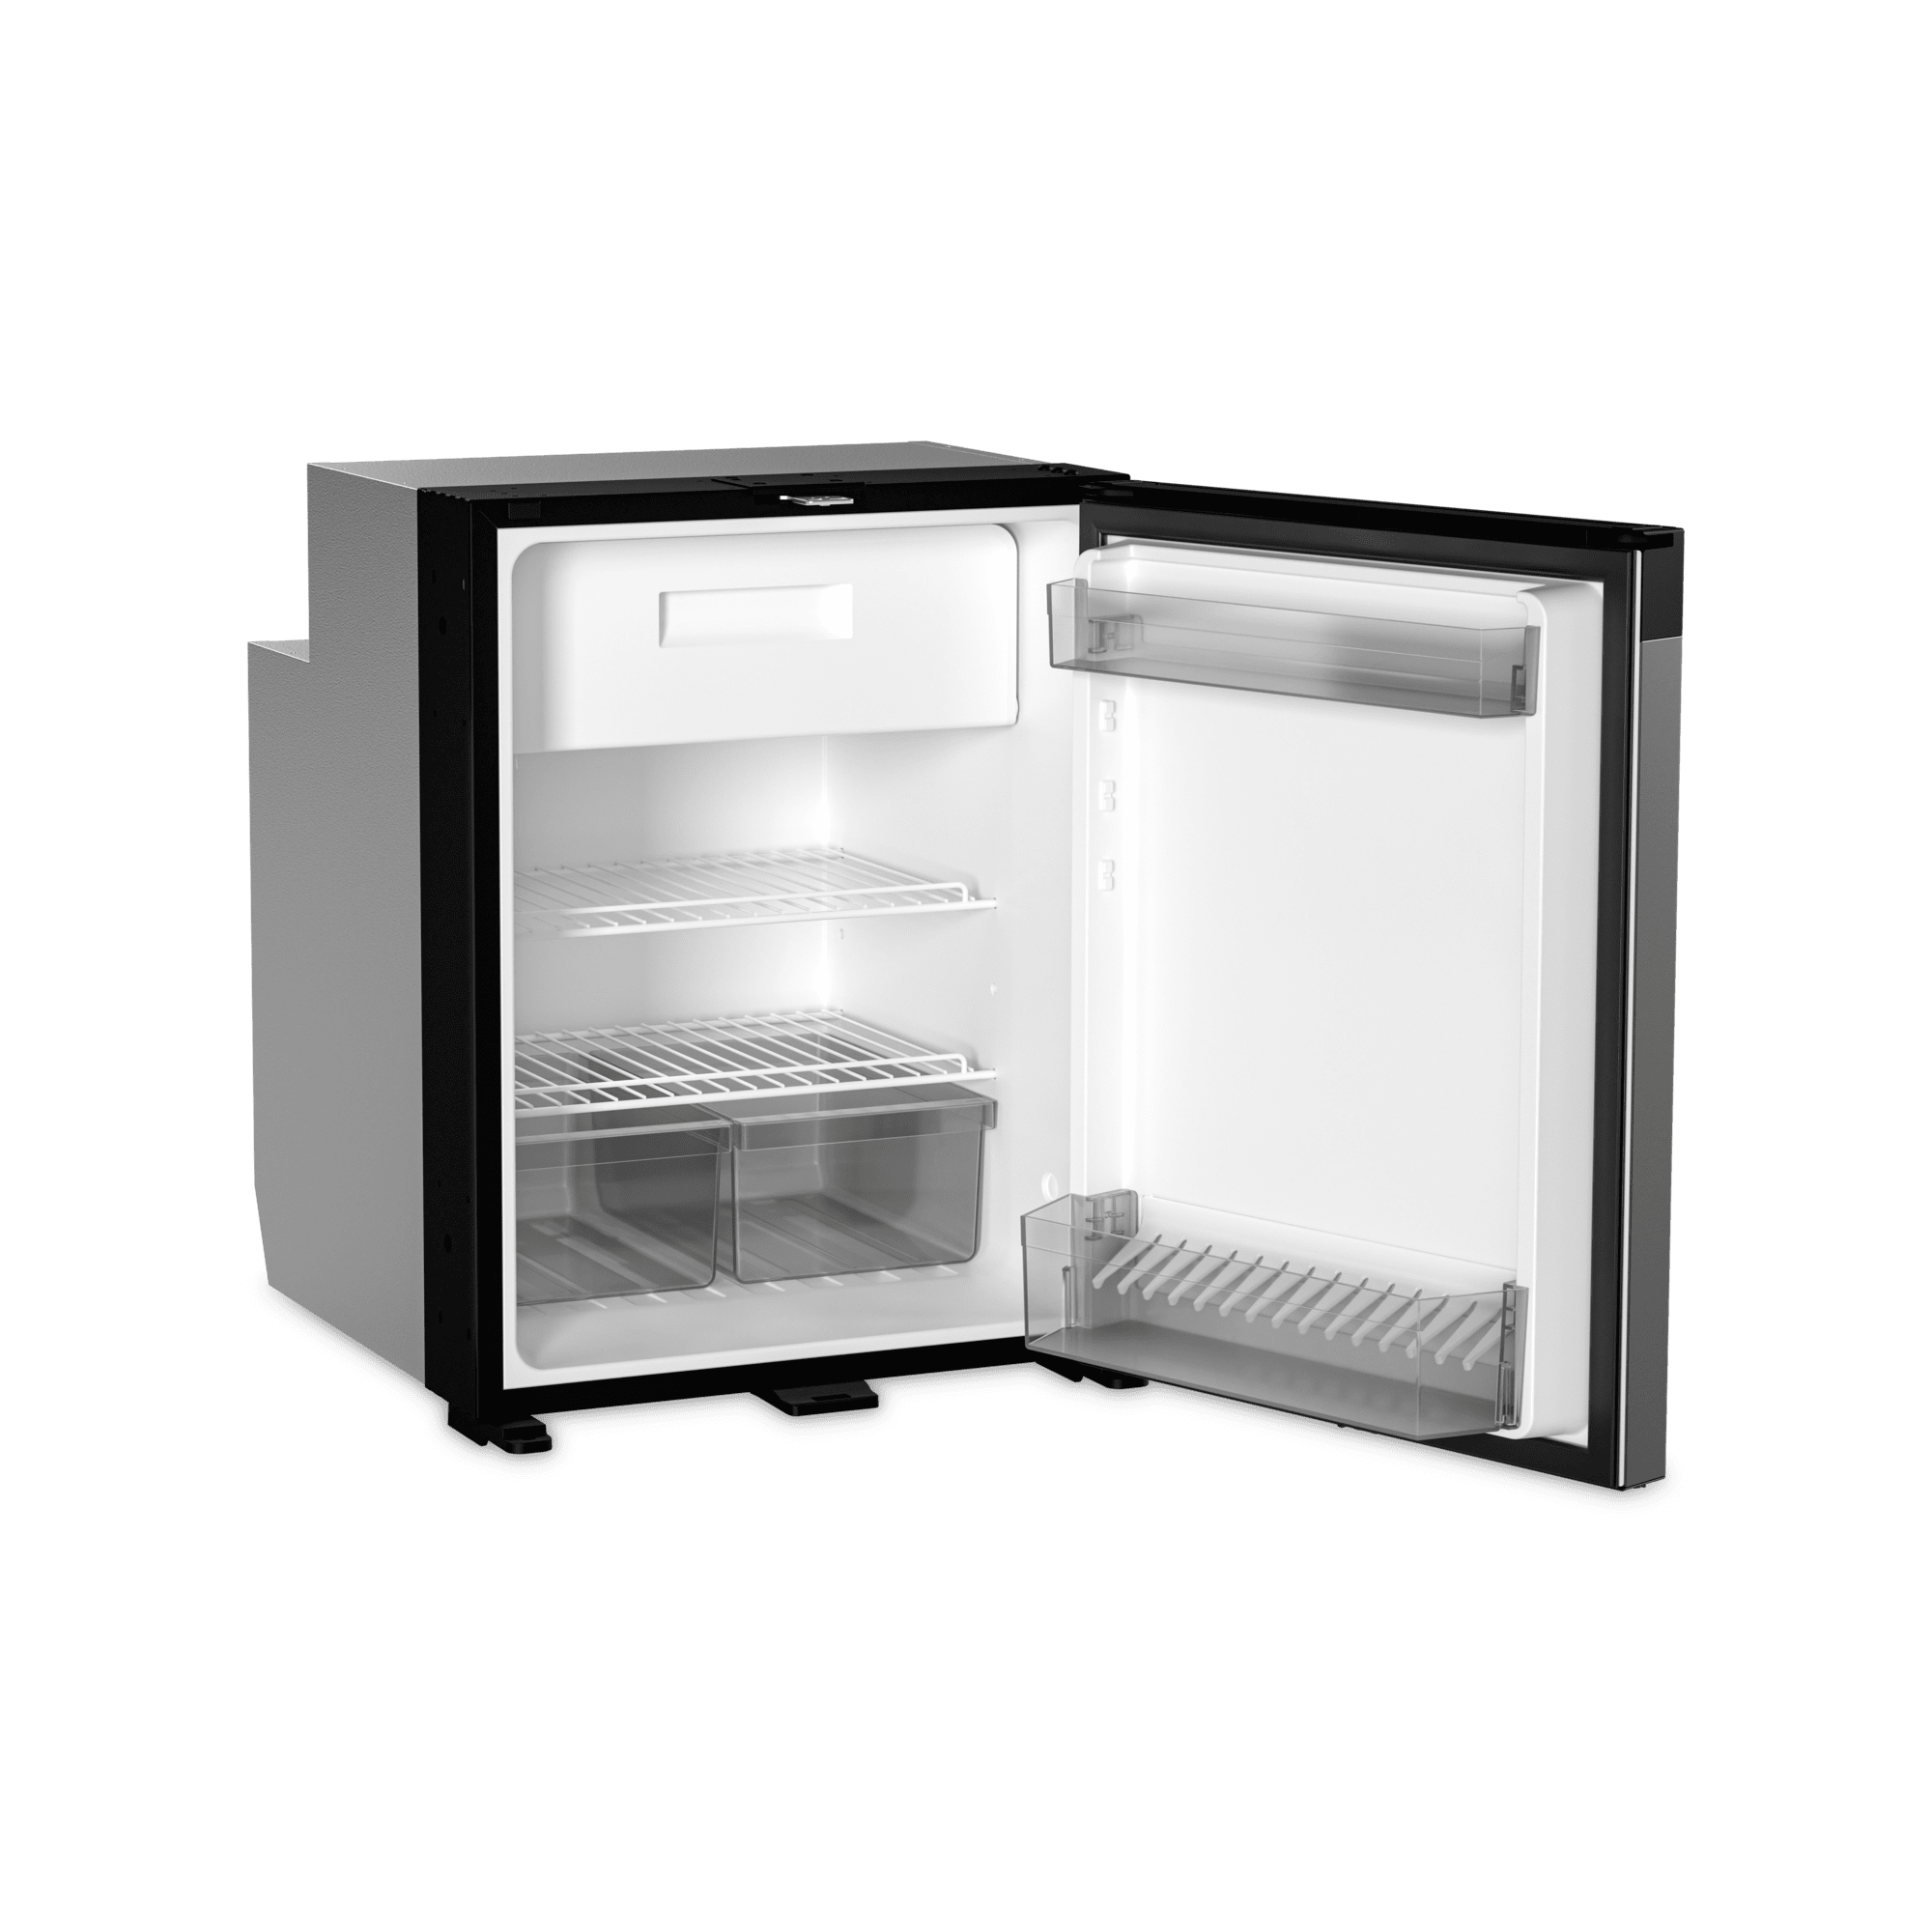 DOMETIC NRX 80C Compressor Fridge Freezer Interior